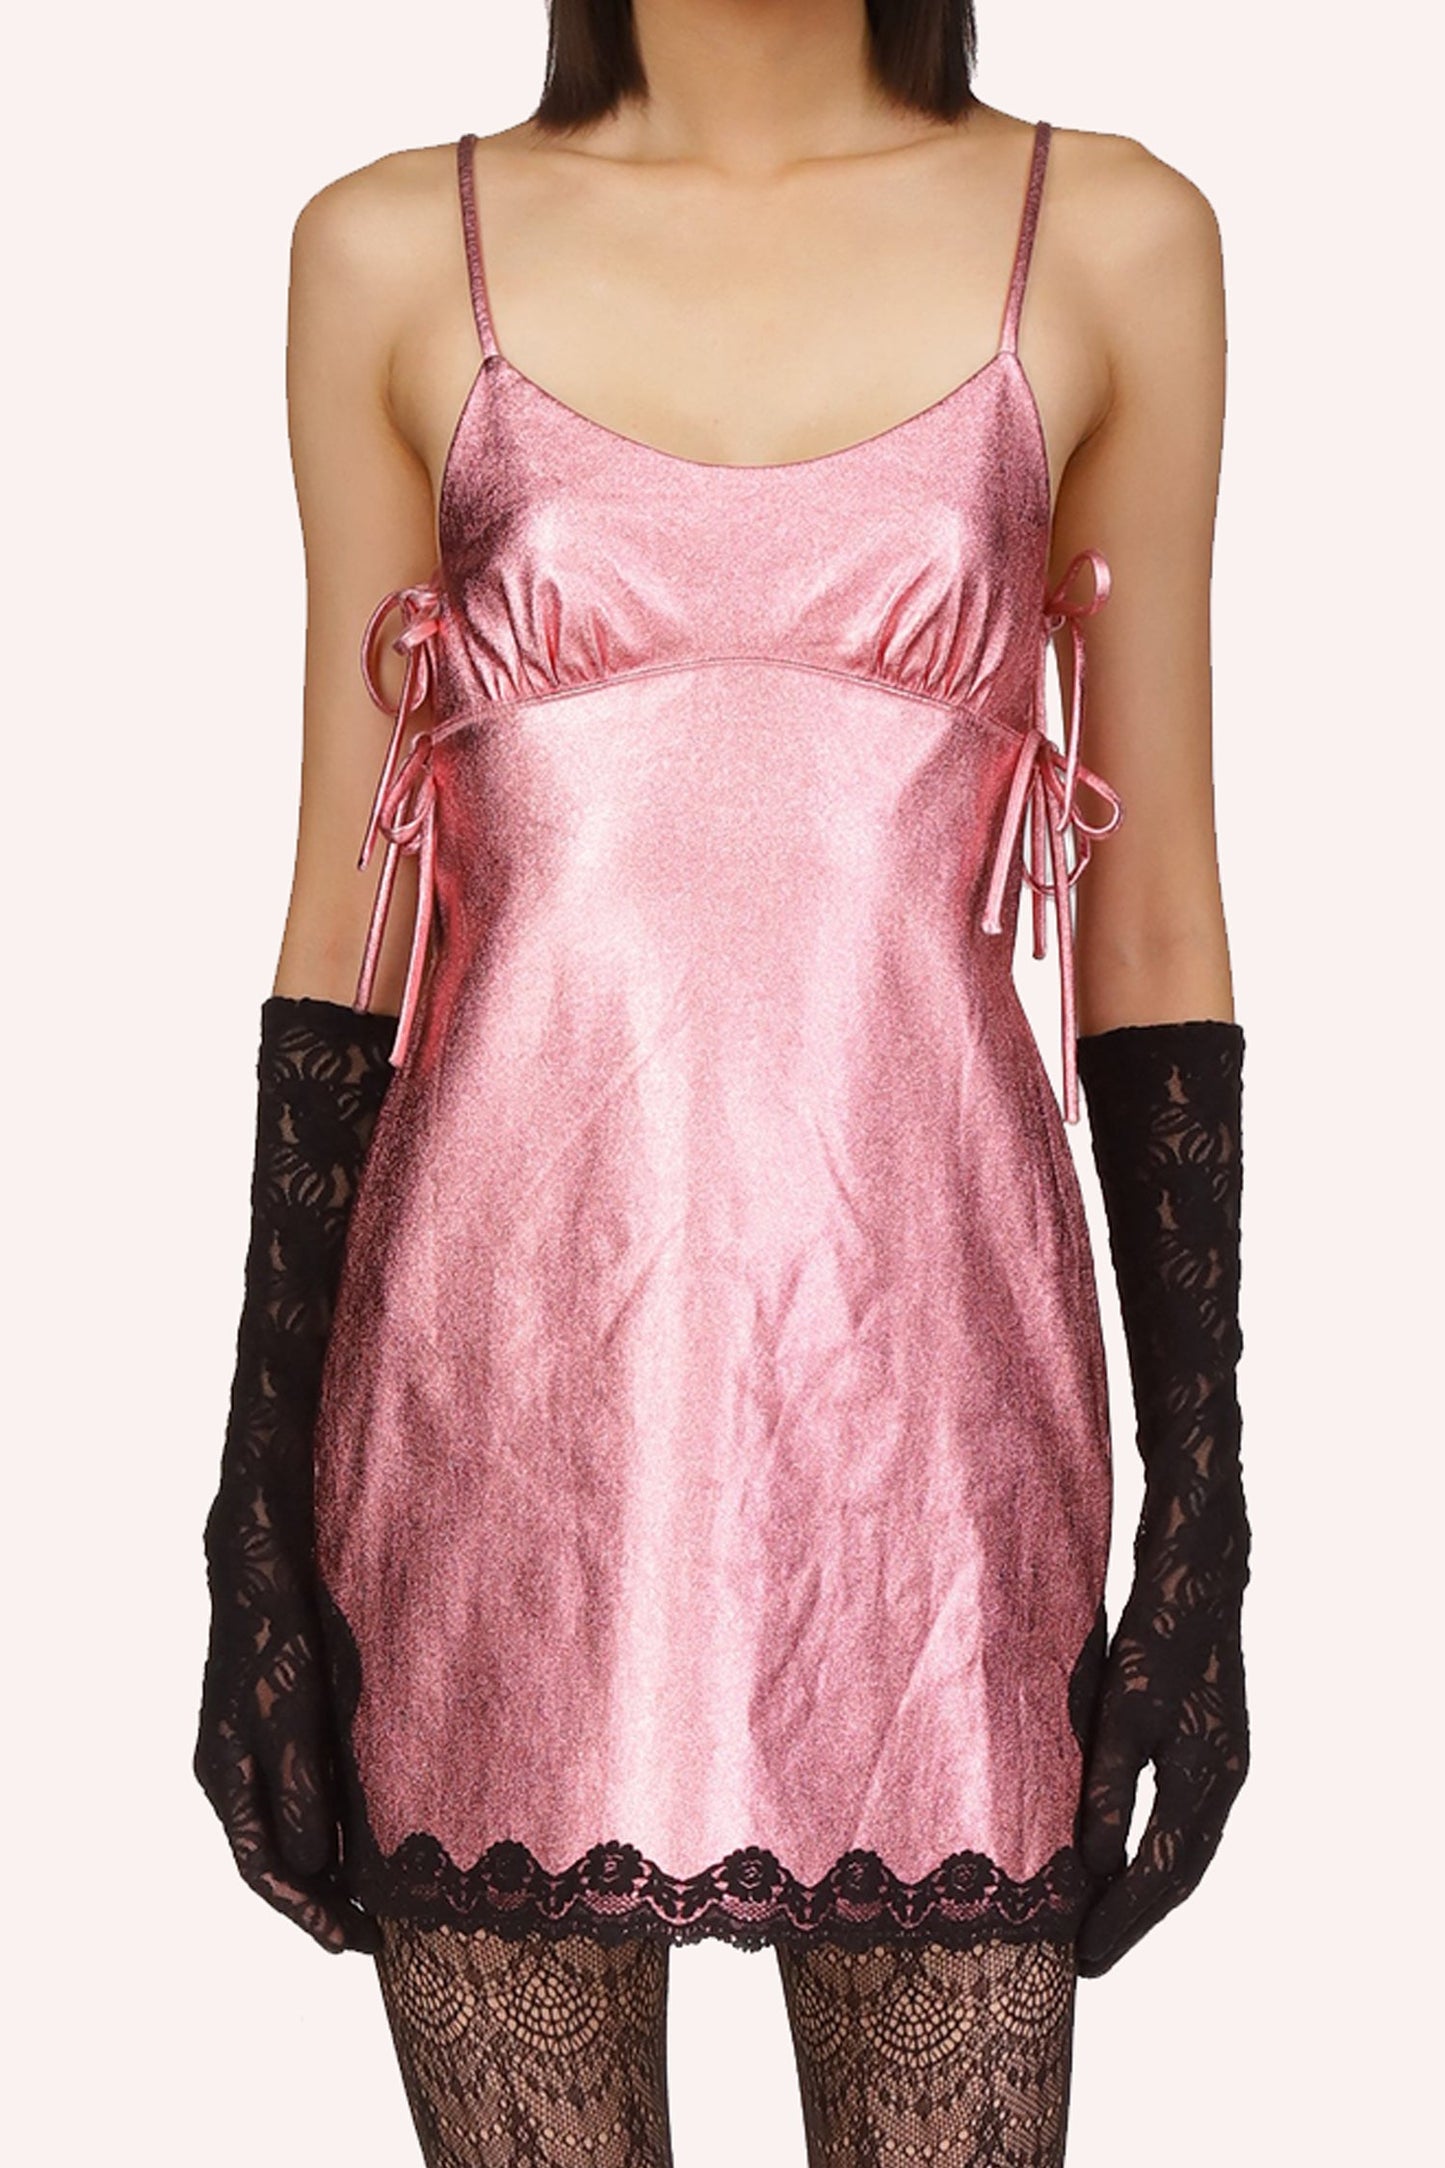 Bubblegum, sleeveless, 2-straps, bottom wavy black lace, pink grommets under breast to adjust